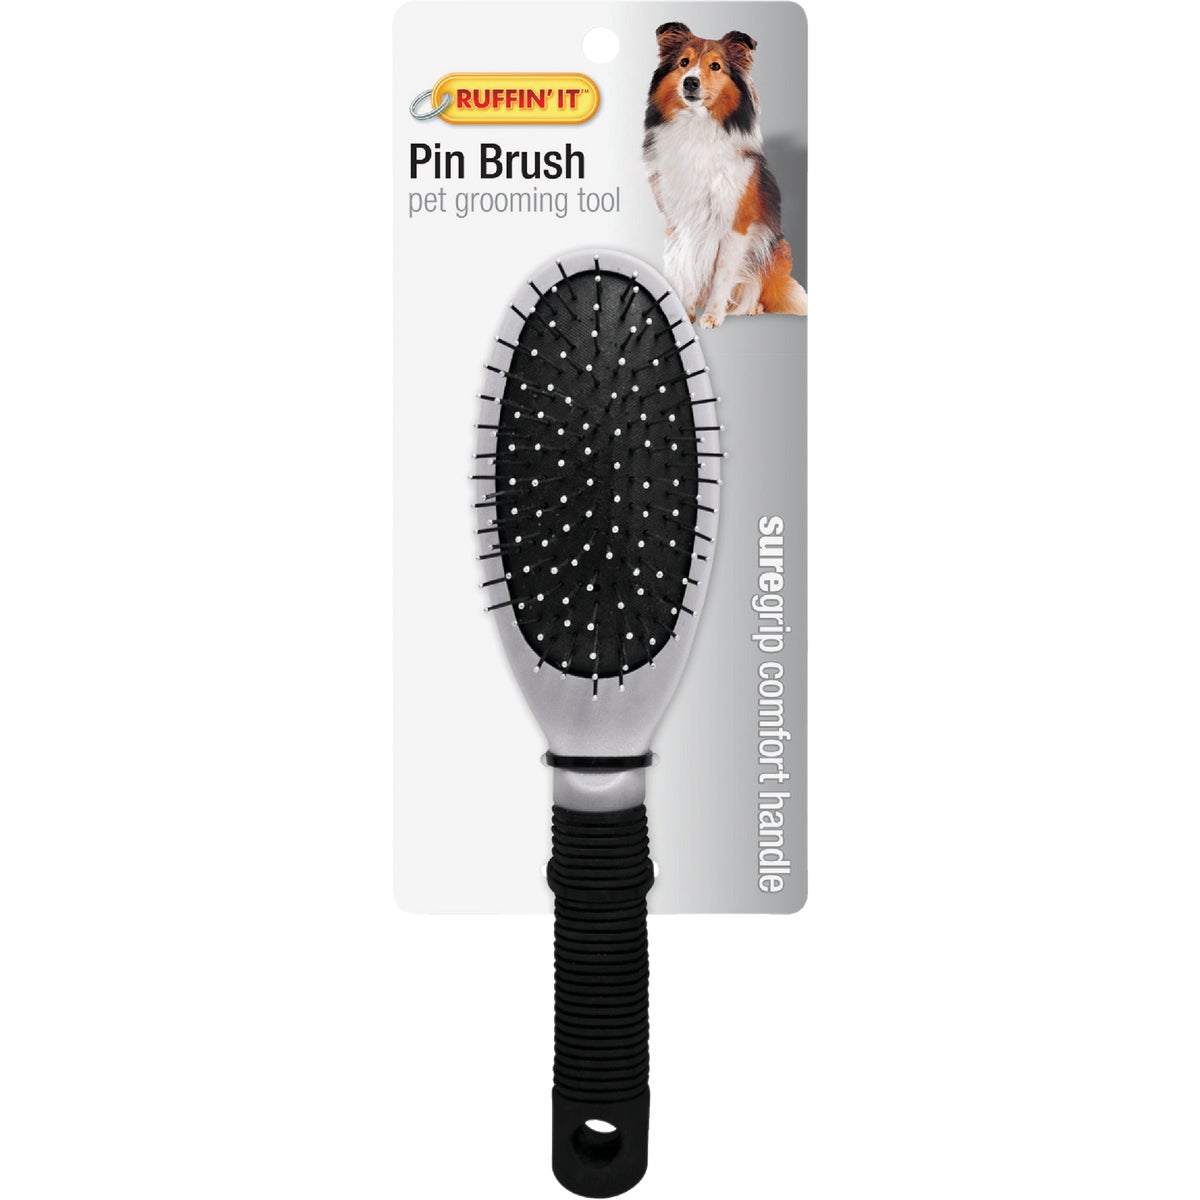 Item 810643, Pin brush pet grooming tool.